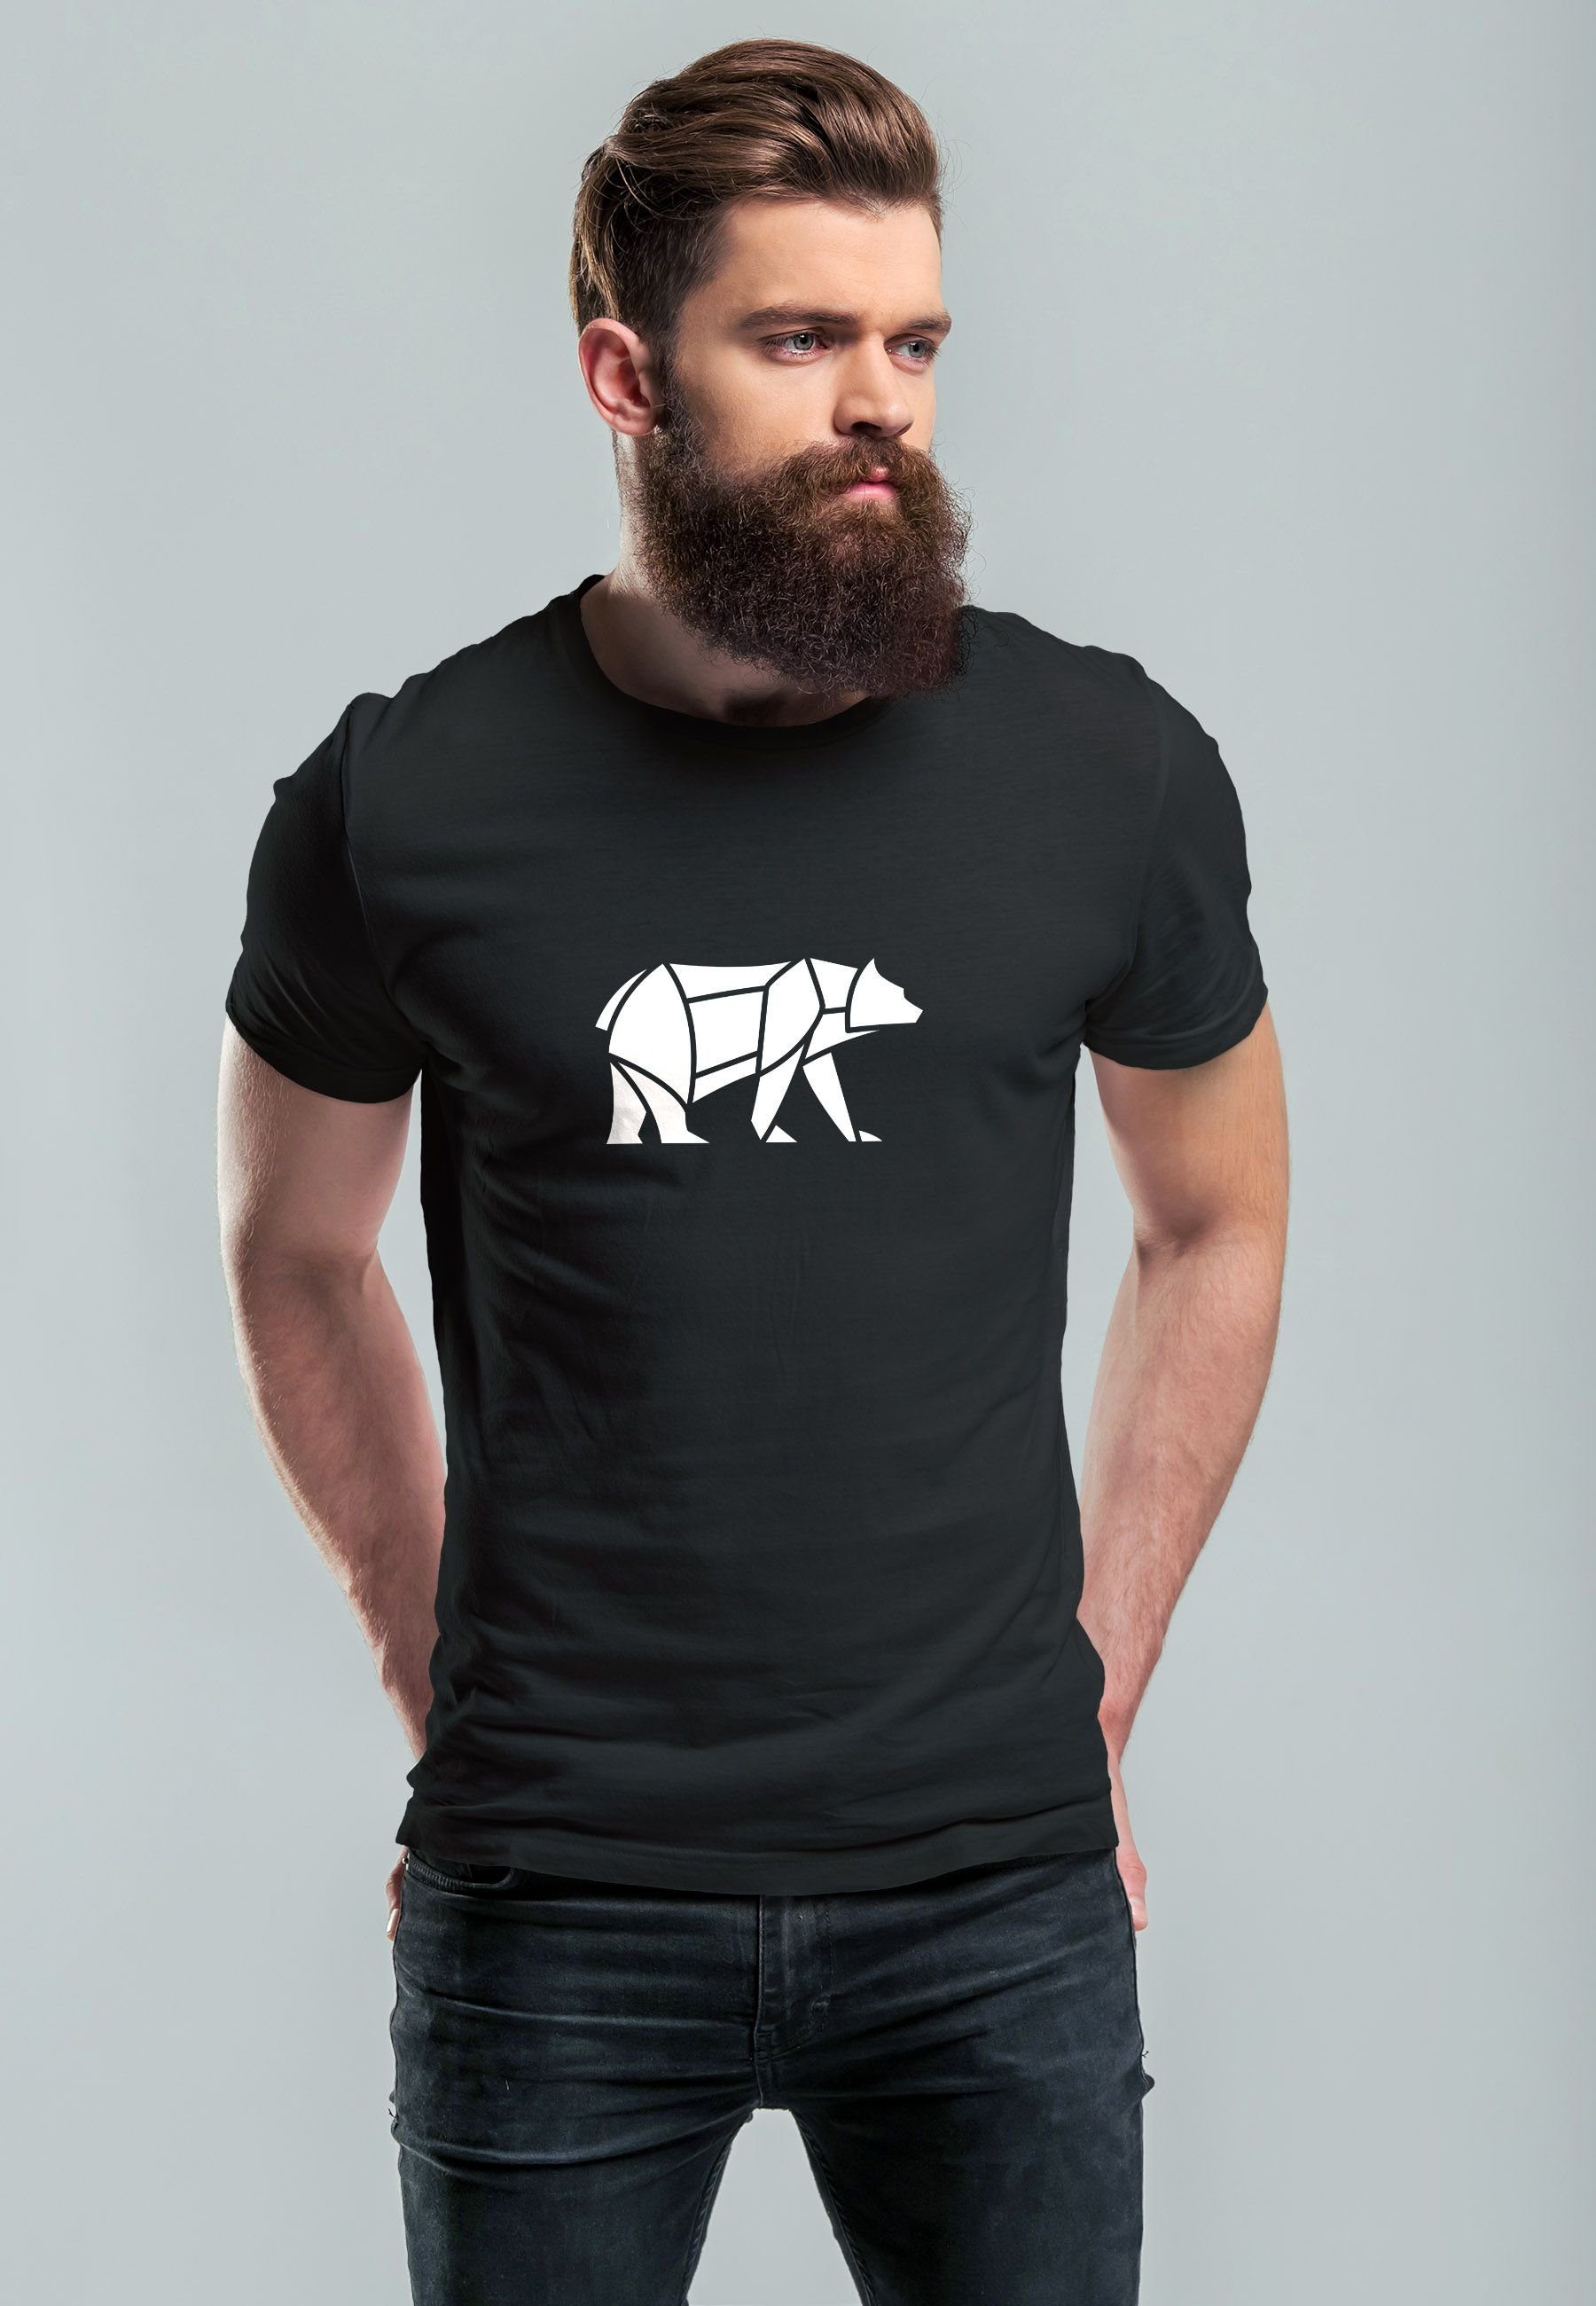 schwarz Print-Shirt Tiermotiv Bear mit T-Shirt 1 Herren Print Polygon Bär Neverless Polygon Fashion Outdoor Print Design